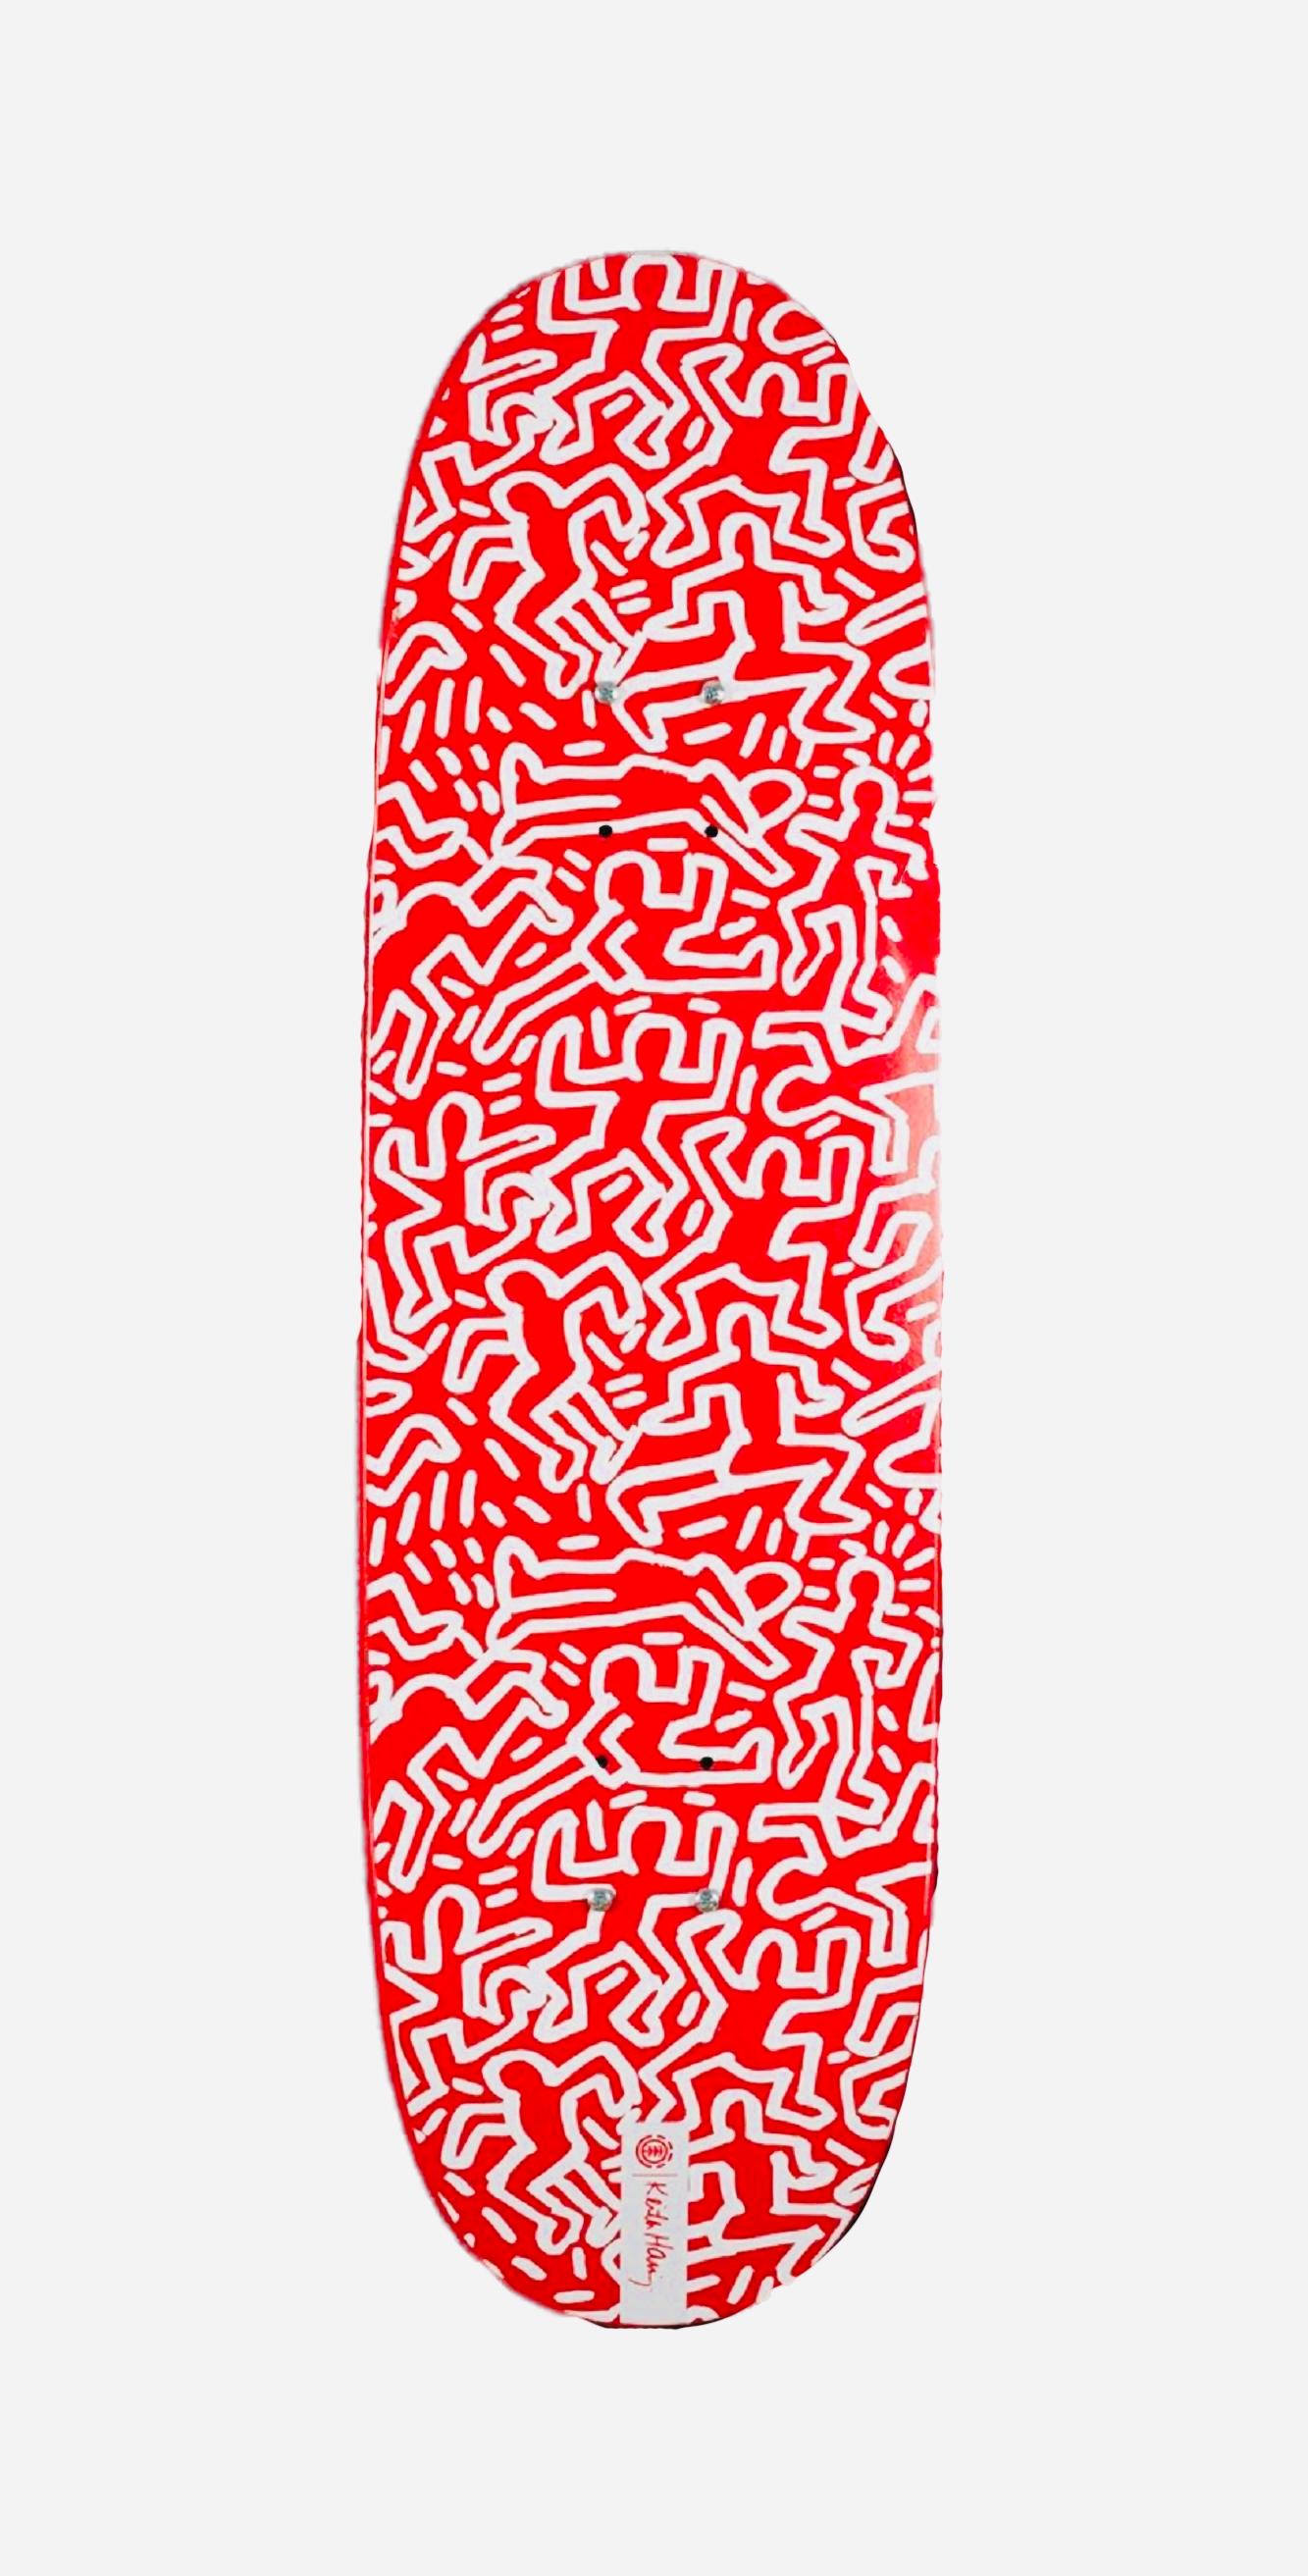 Keith Haring Skateboard Deck (Keith Haring three eyed face) - Print by (after) Keith Haring